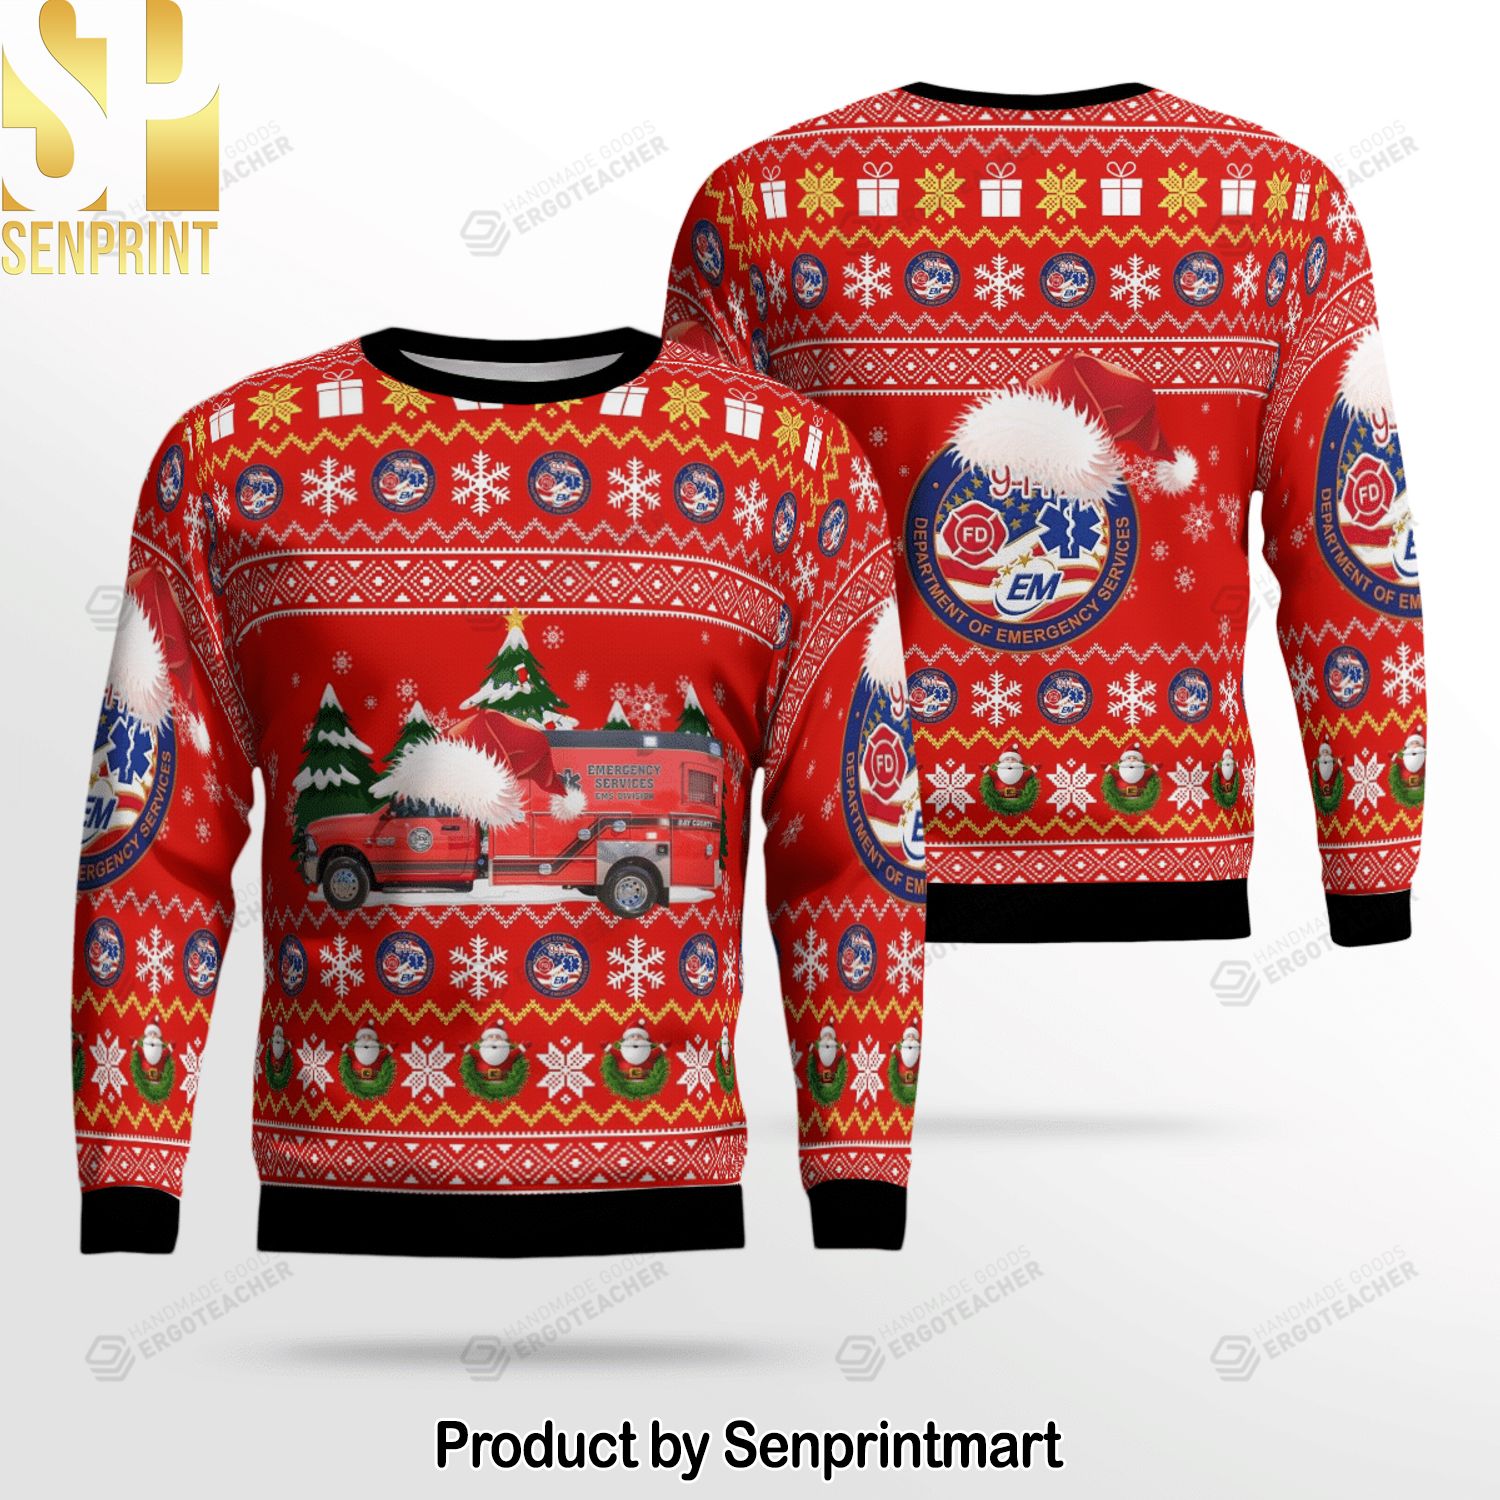 Florida Bay County Ems Knitting Pattern Ugly Christmas Holiday Sweater